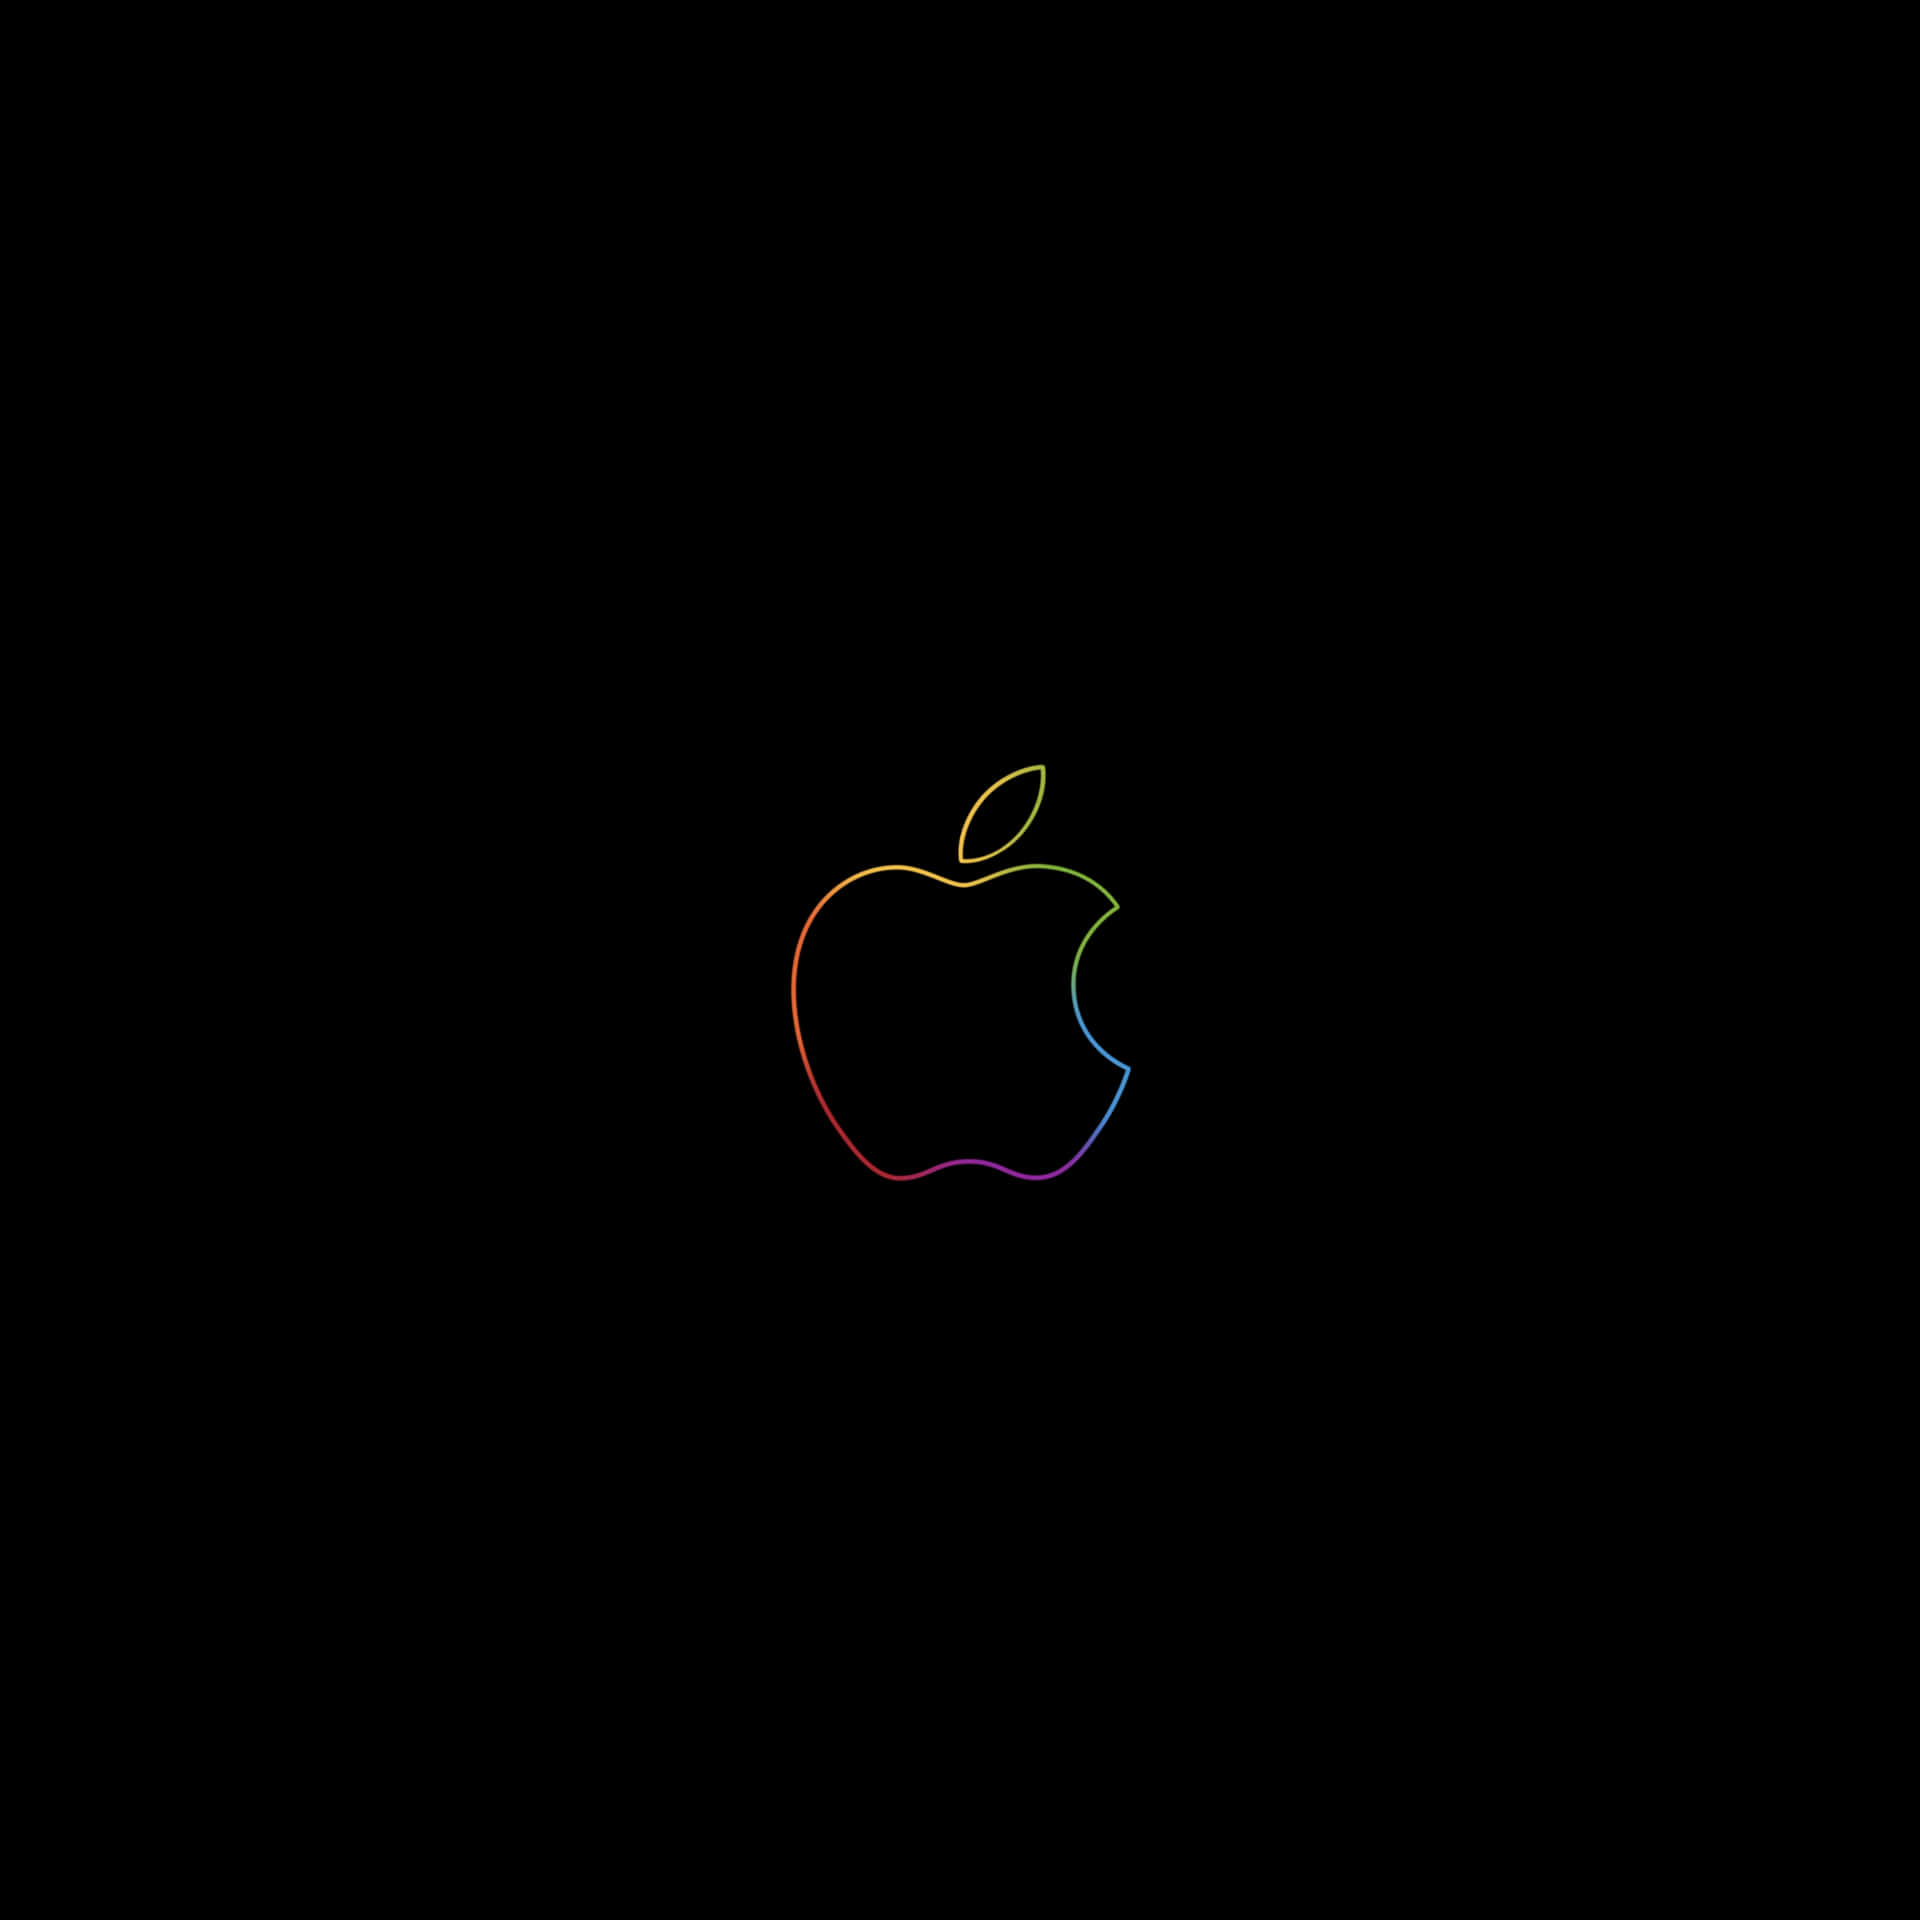 Download Black Apple Logo With Vibrant Outline Wallpaper | Wallpapers.com